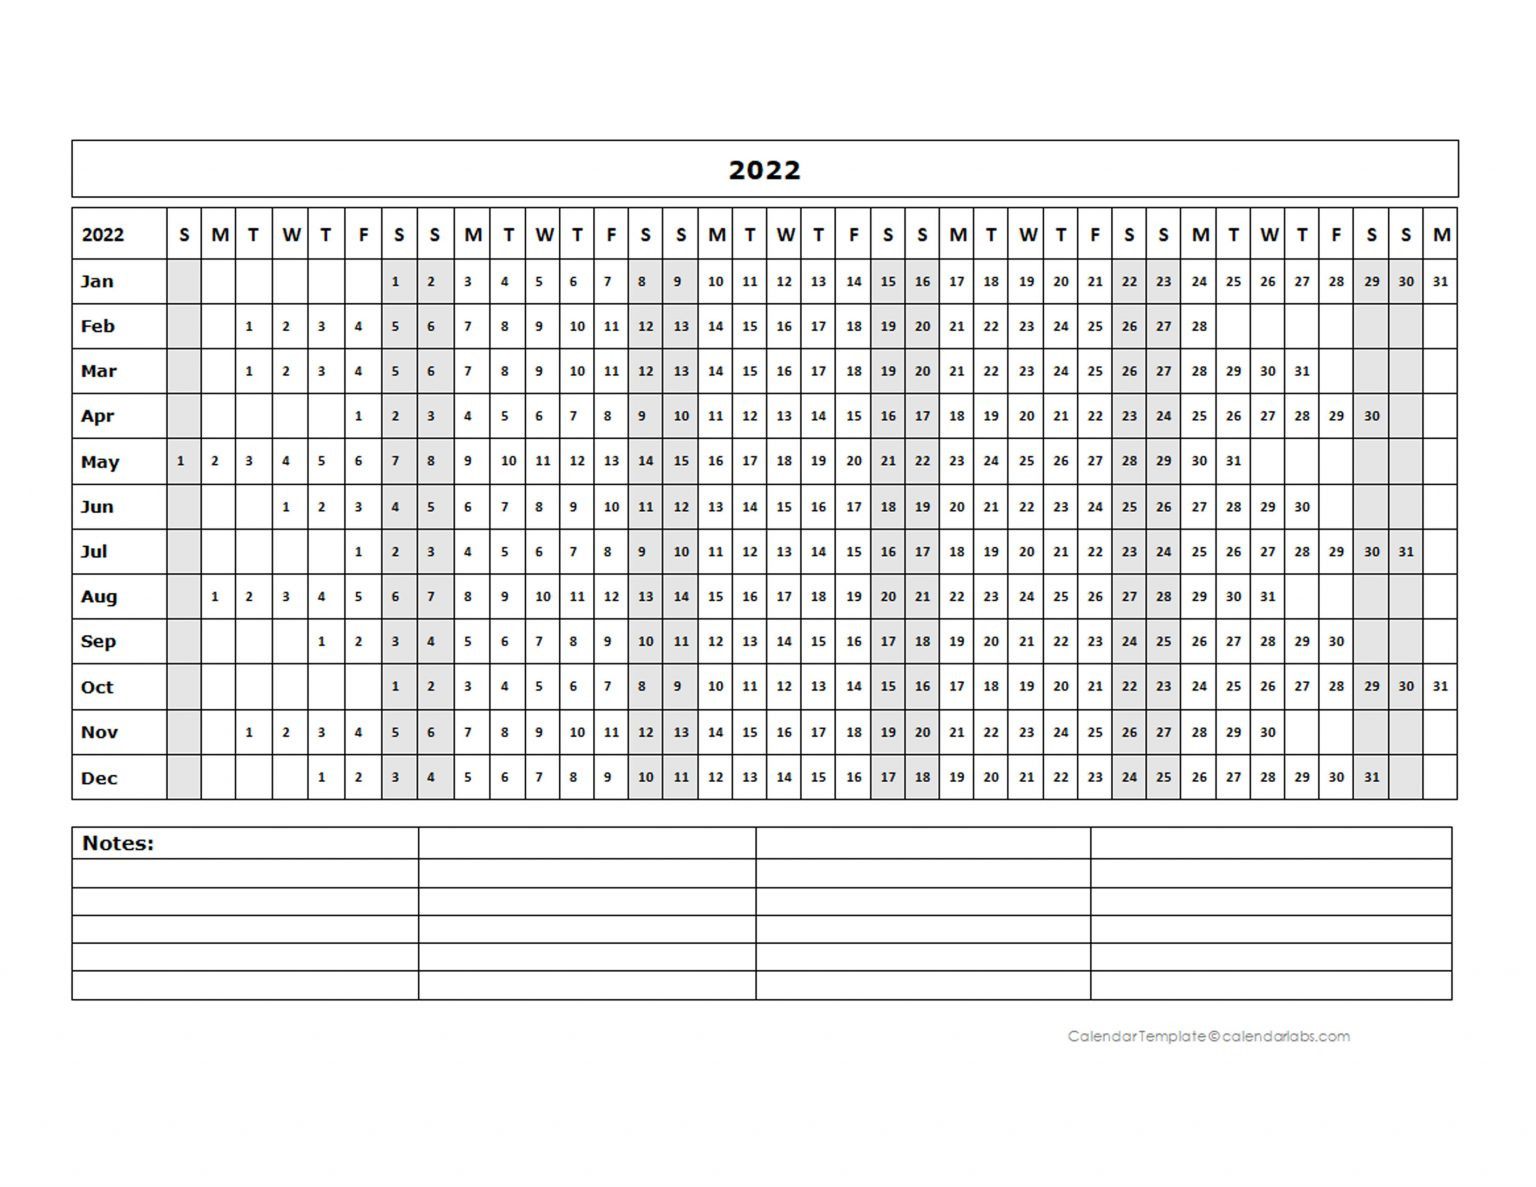 Julian Date Calendar 2022 | Printable Calendar 2021-2022  Julian Calendar 2022 Vs Gregorian